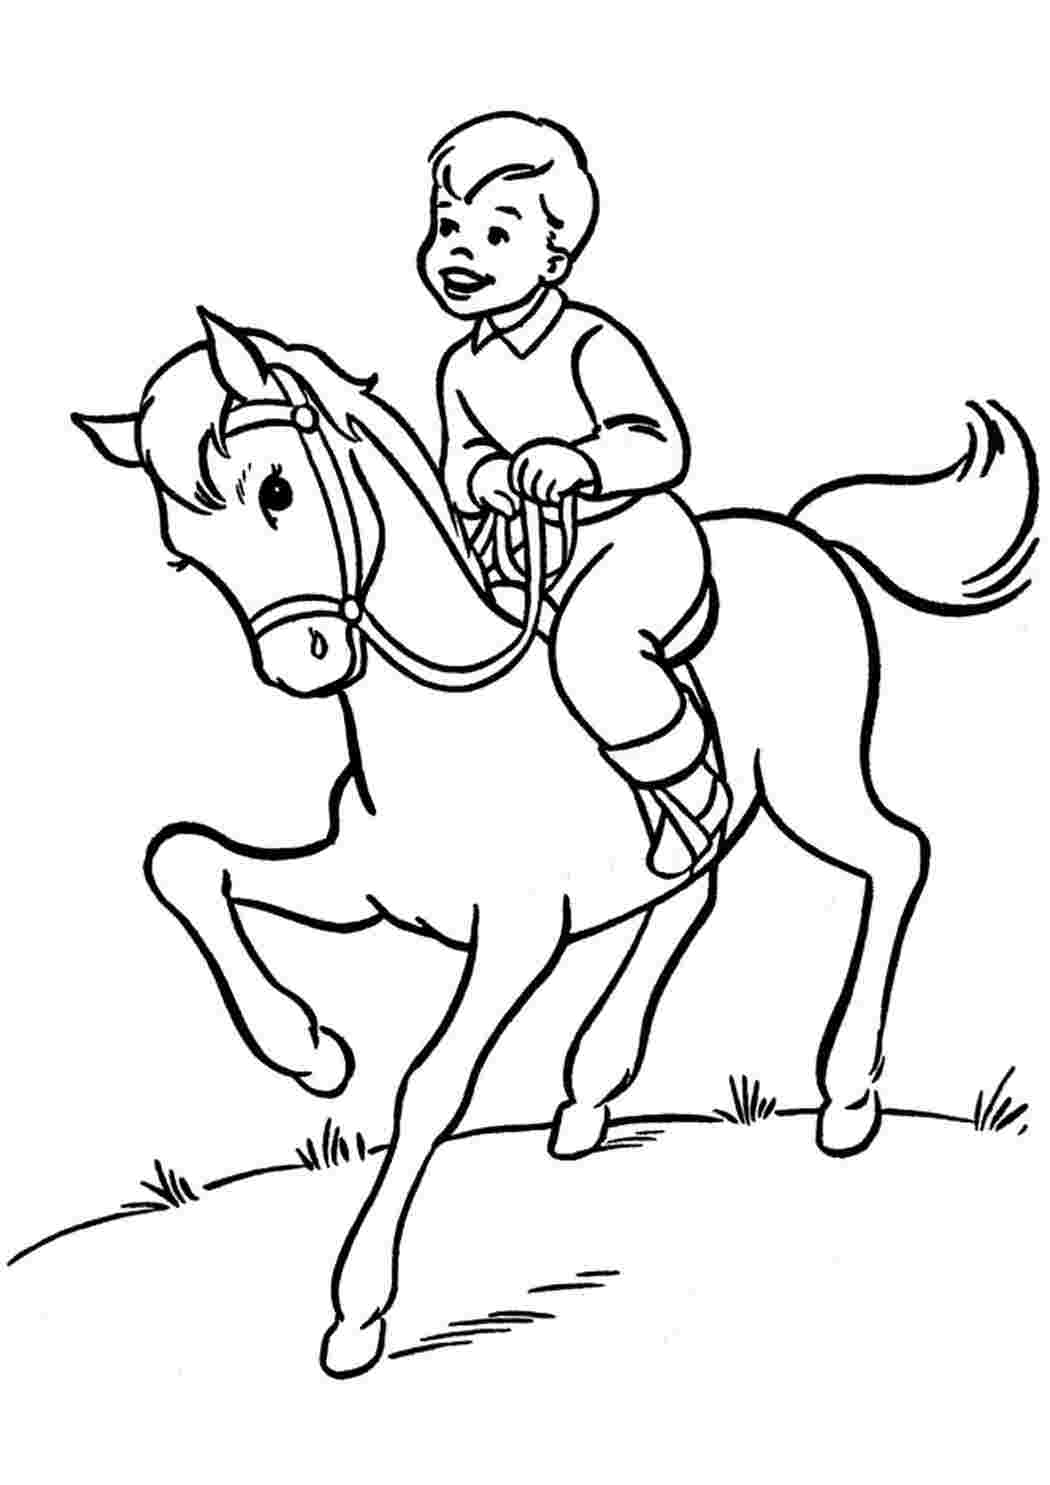 Раскраска человек на лошади